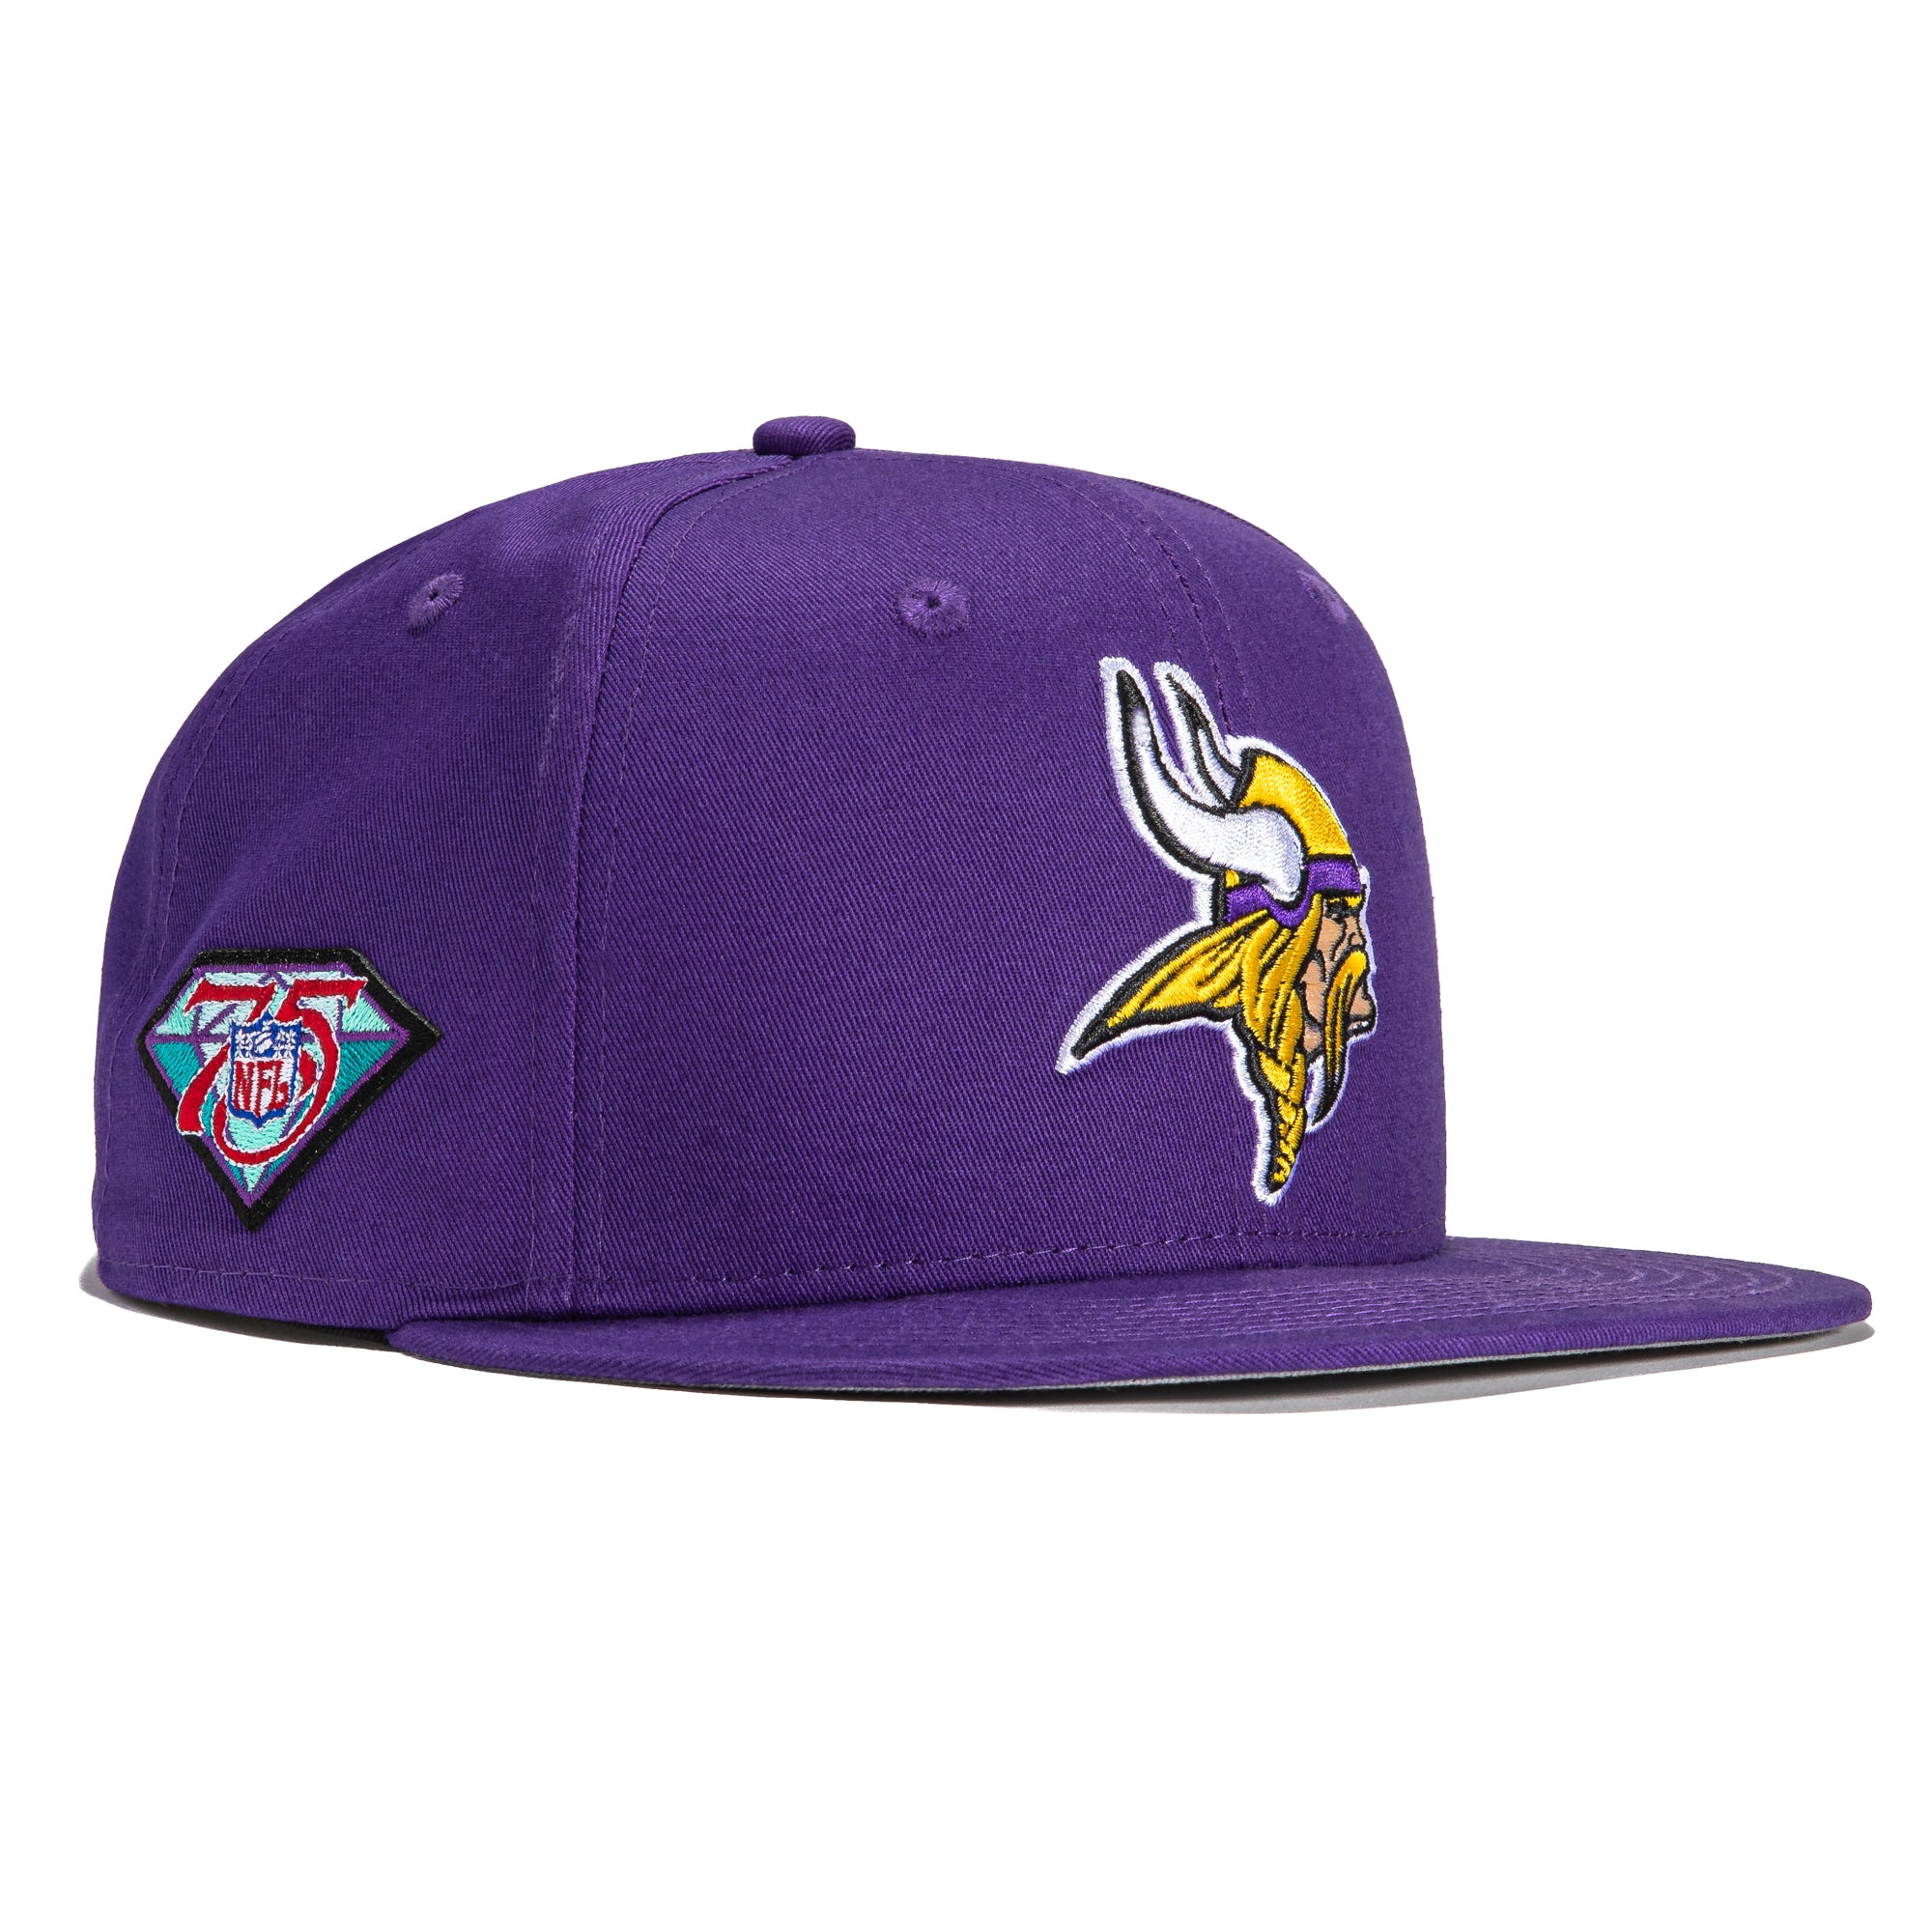 New Era 9FIFTY Minnesota Vikings 75th Anniversary Patch Snapback Hat - Purple